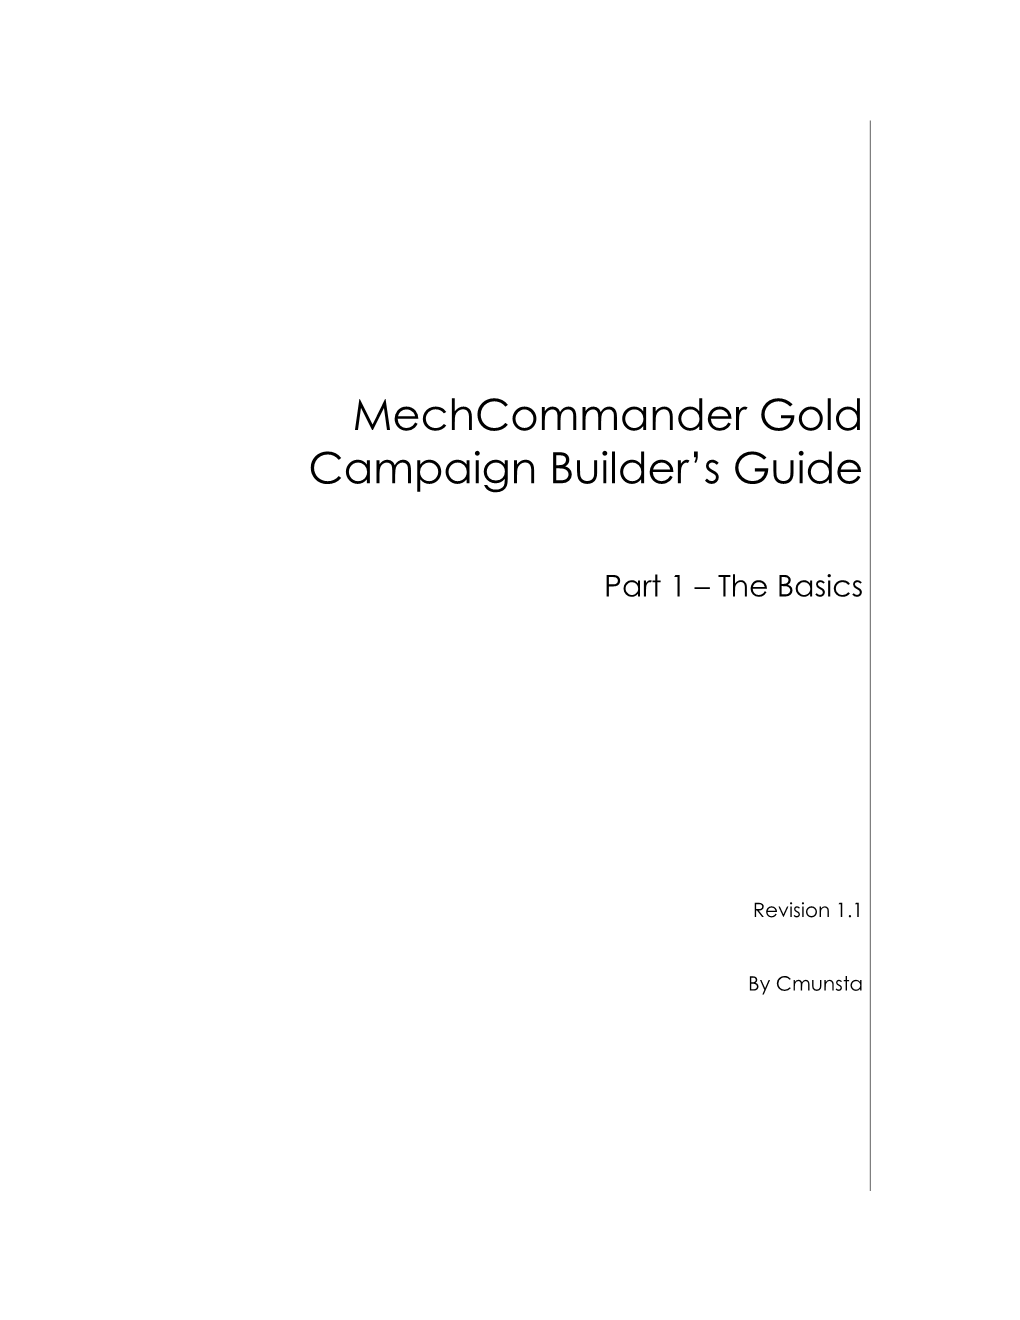 Mechcommander Gold Campaign Creation